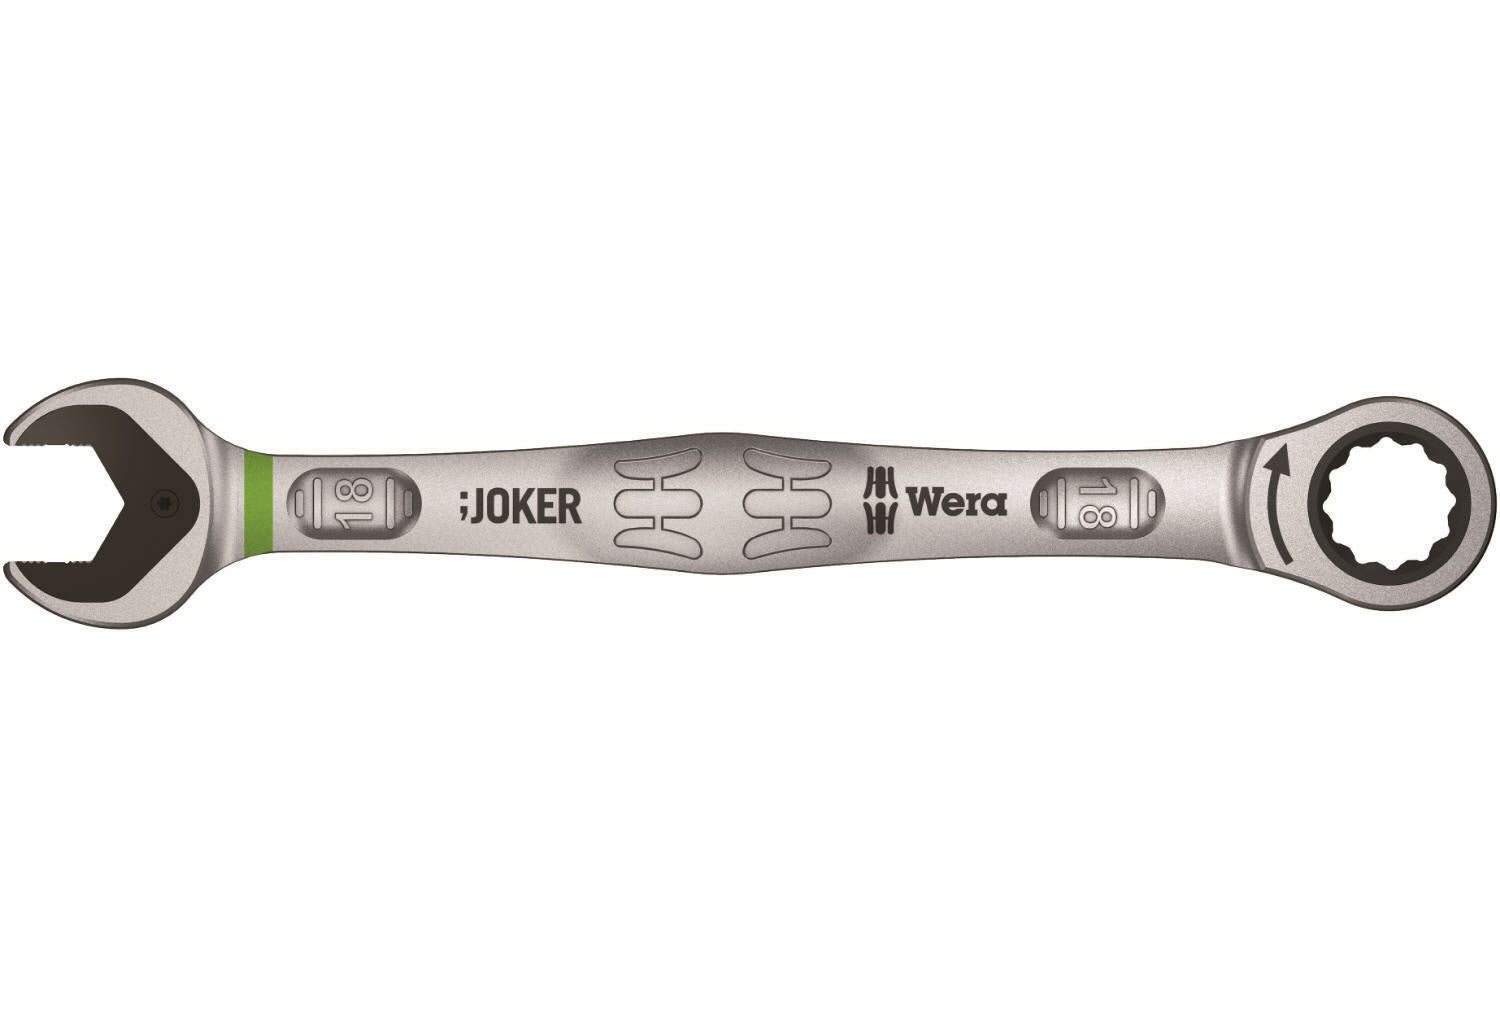 Wera 073276 Joker Combination Wrench - 16mm